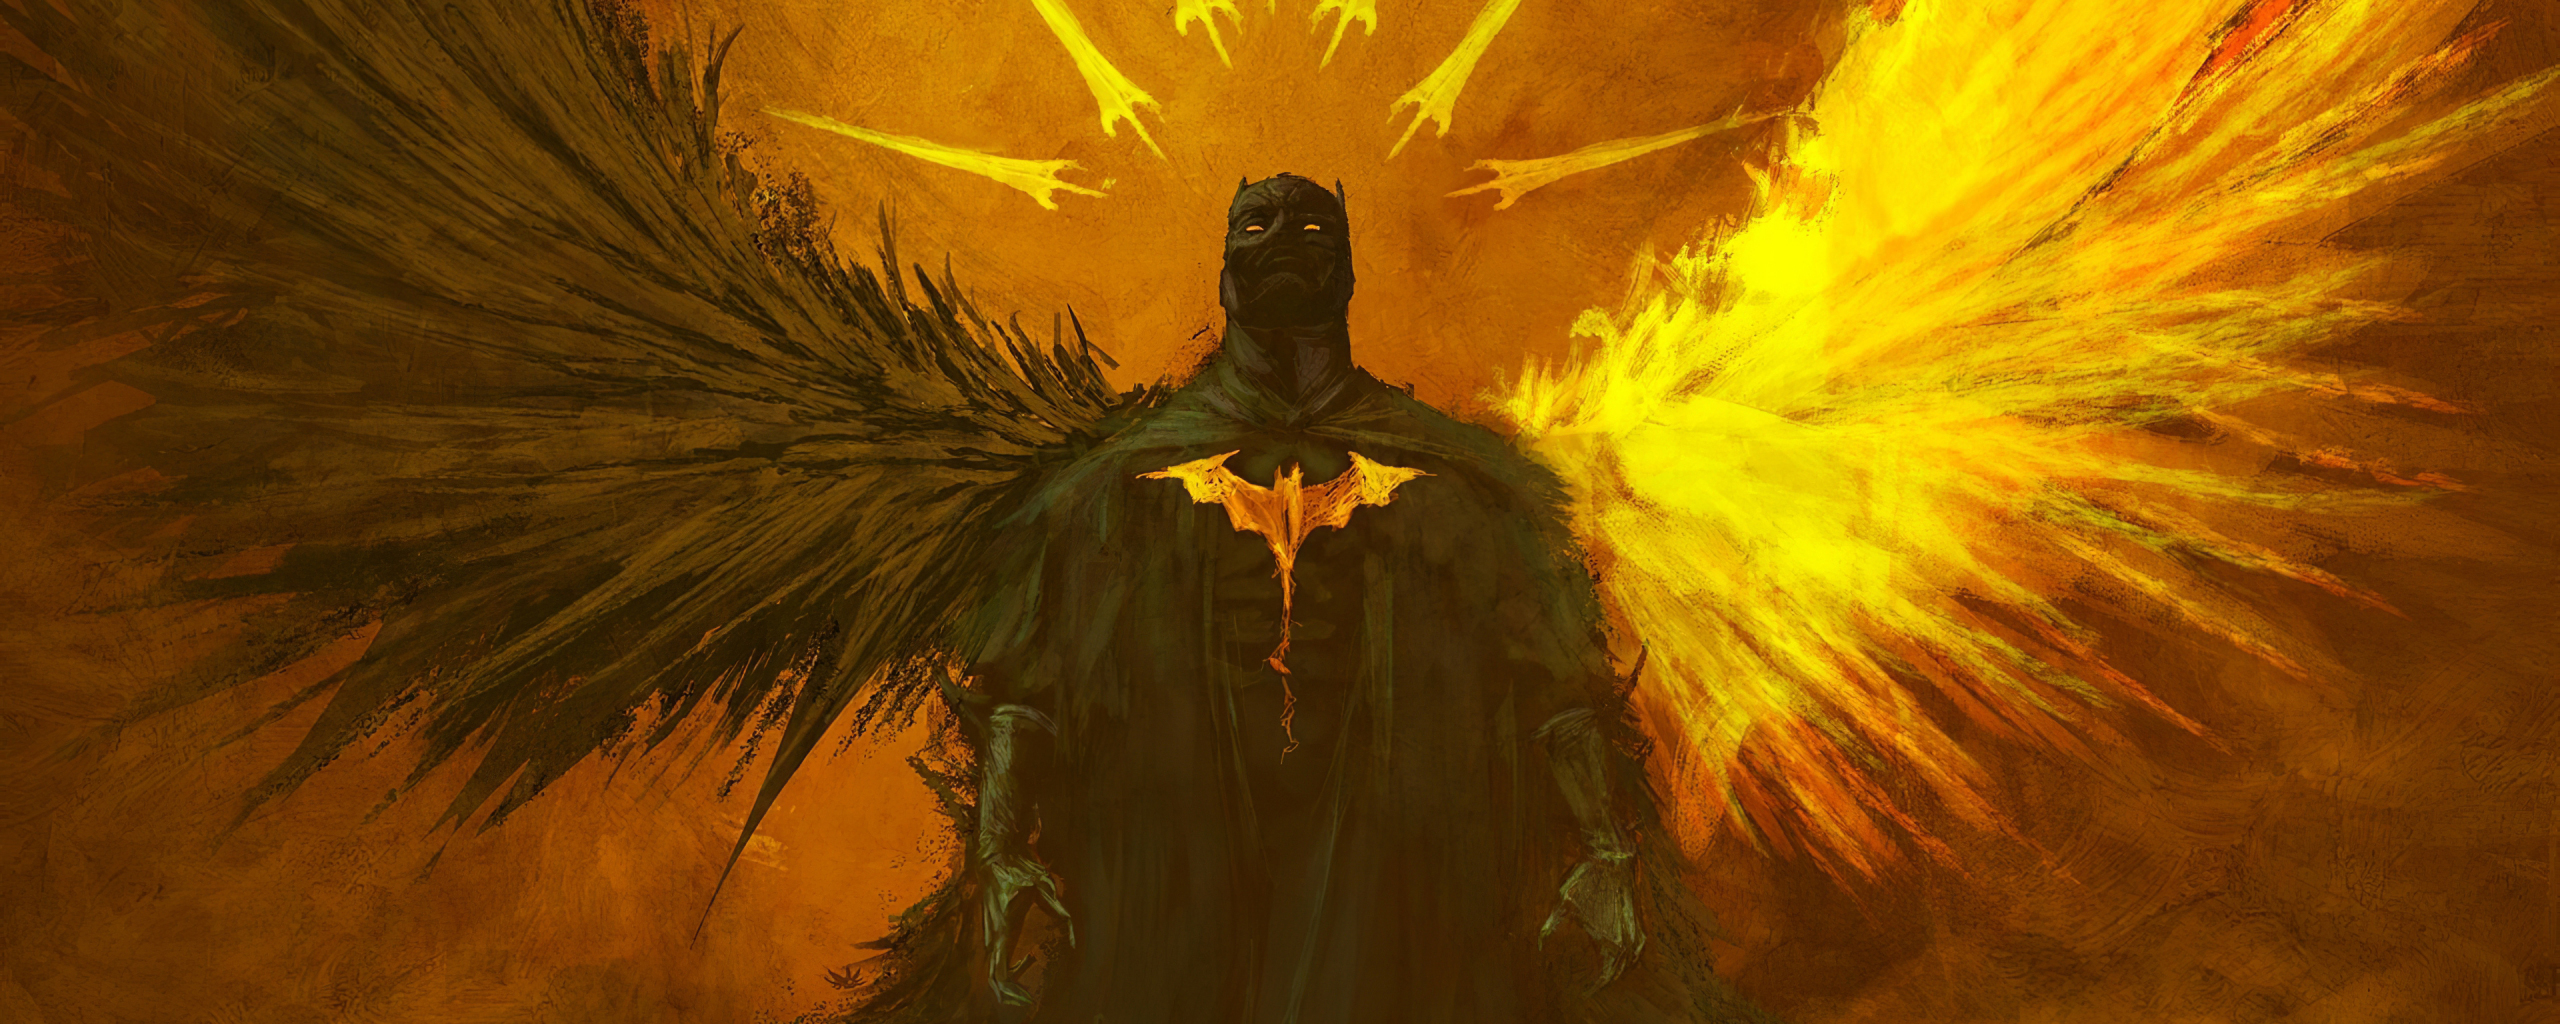 Batman, angel, wings of darkness and good, art, 2560x1024 wallpaper